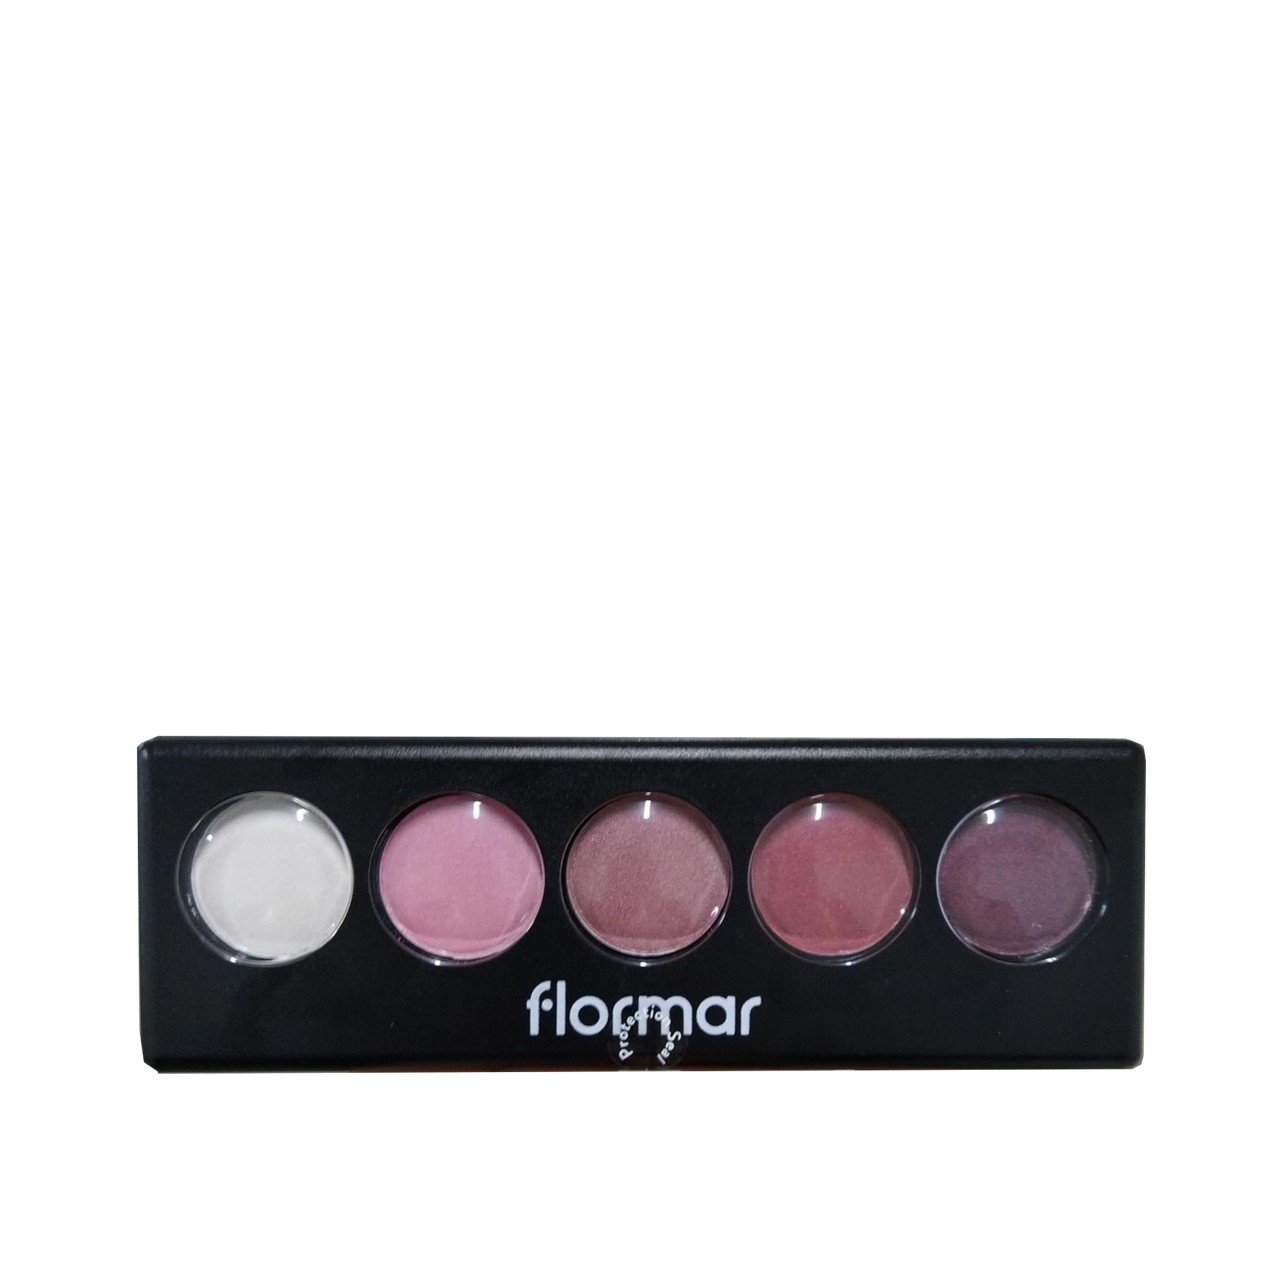 Flormar Color Palette Eyeshadow 06 Pink Desserts 9g